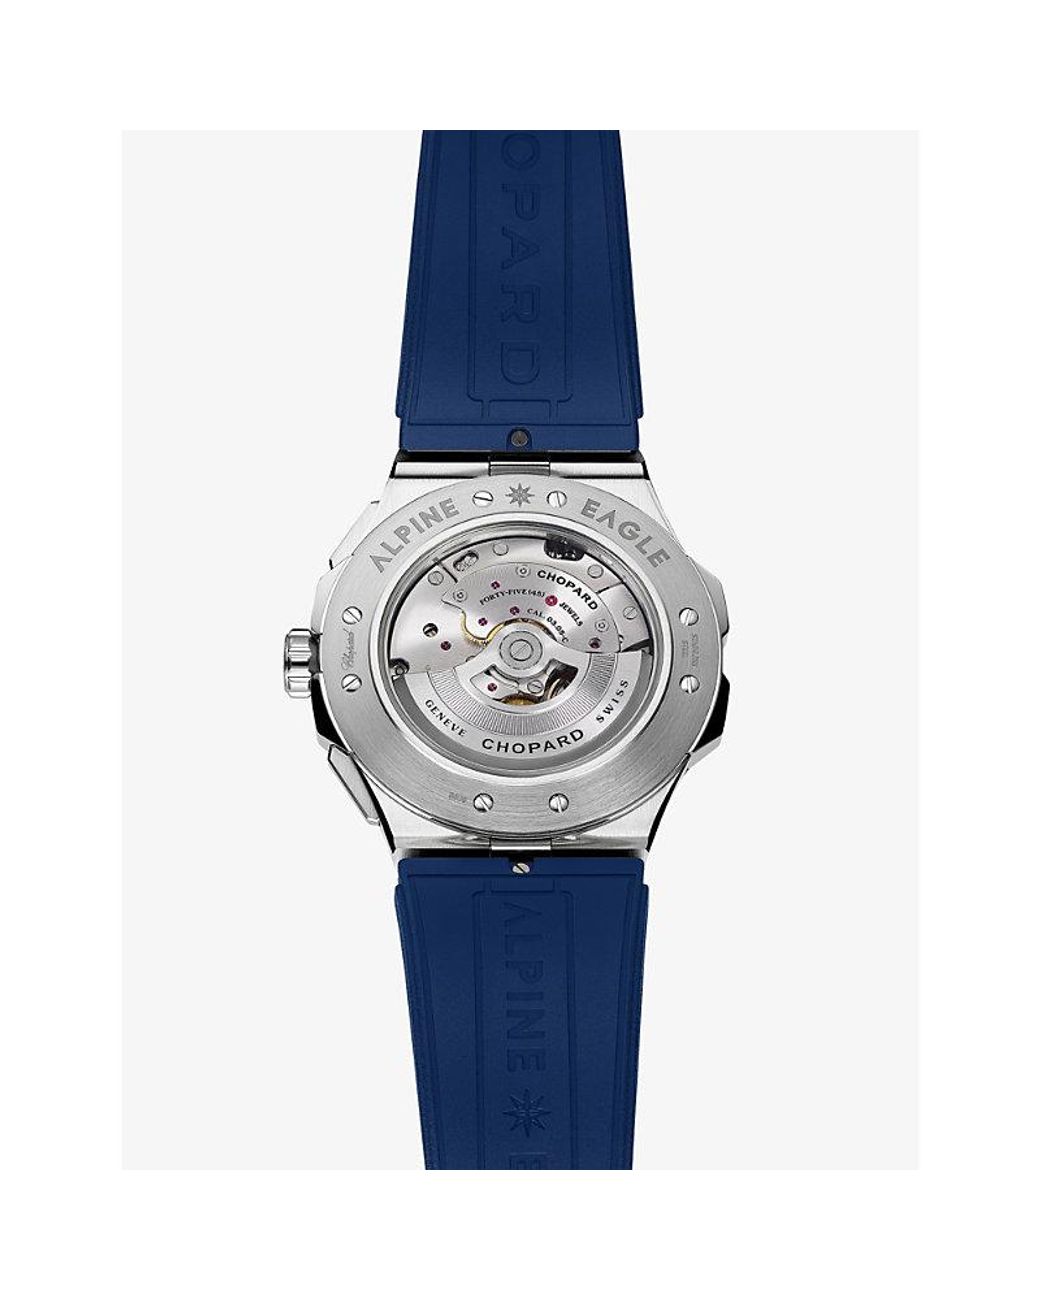 Chopard+Alpine+Eagle+Blue+Men%27s+Watch+-+298600-3001 for sale online